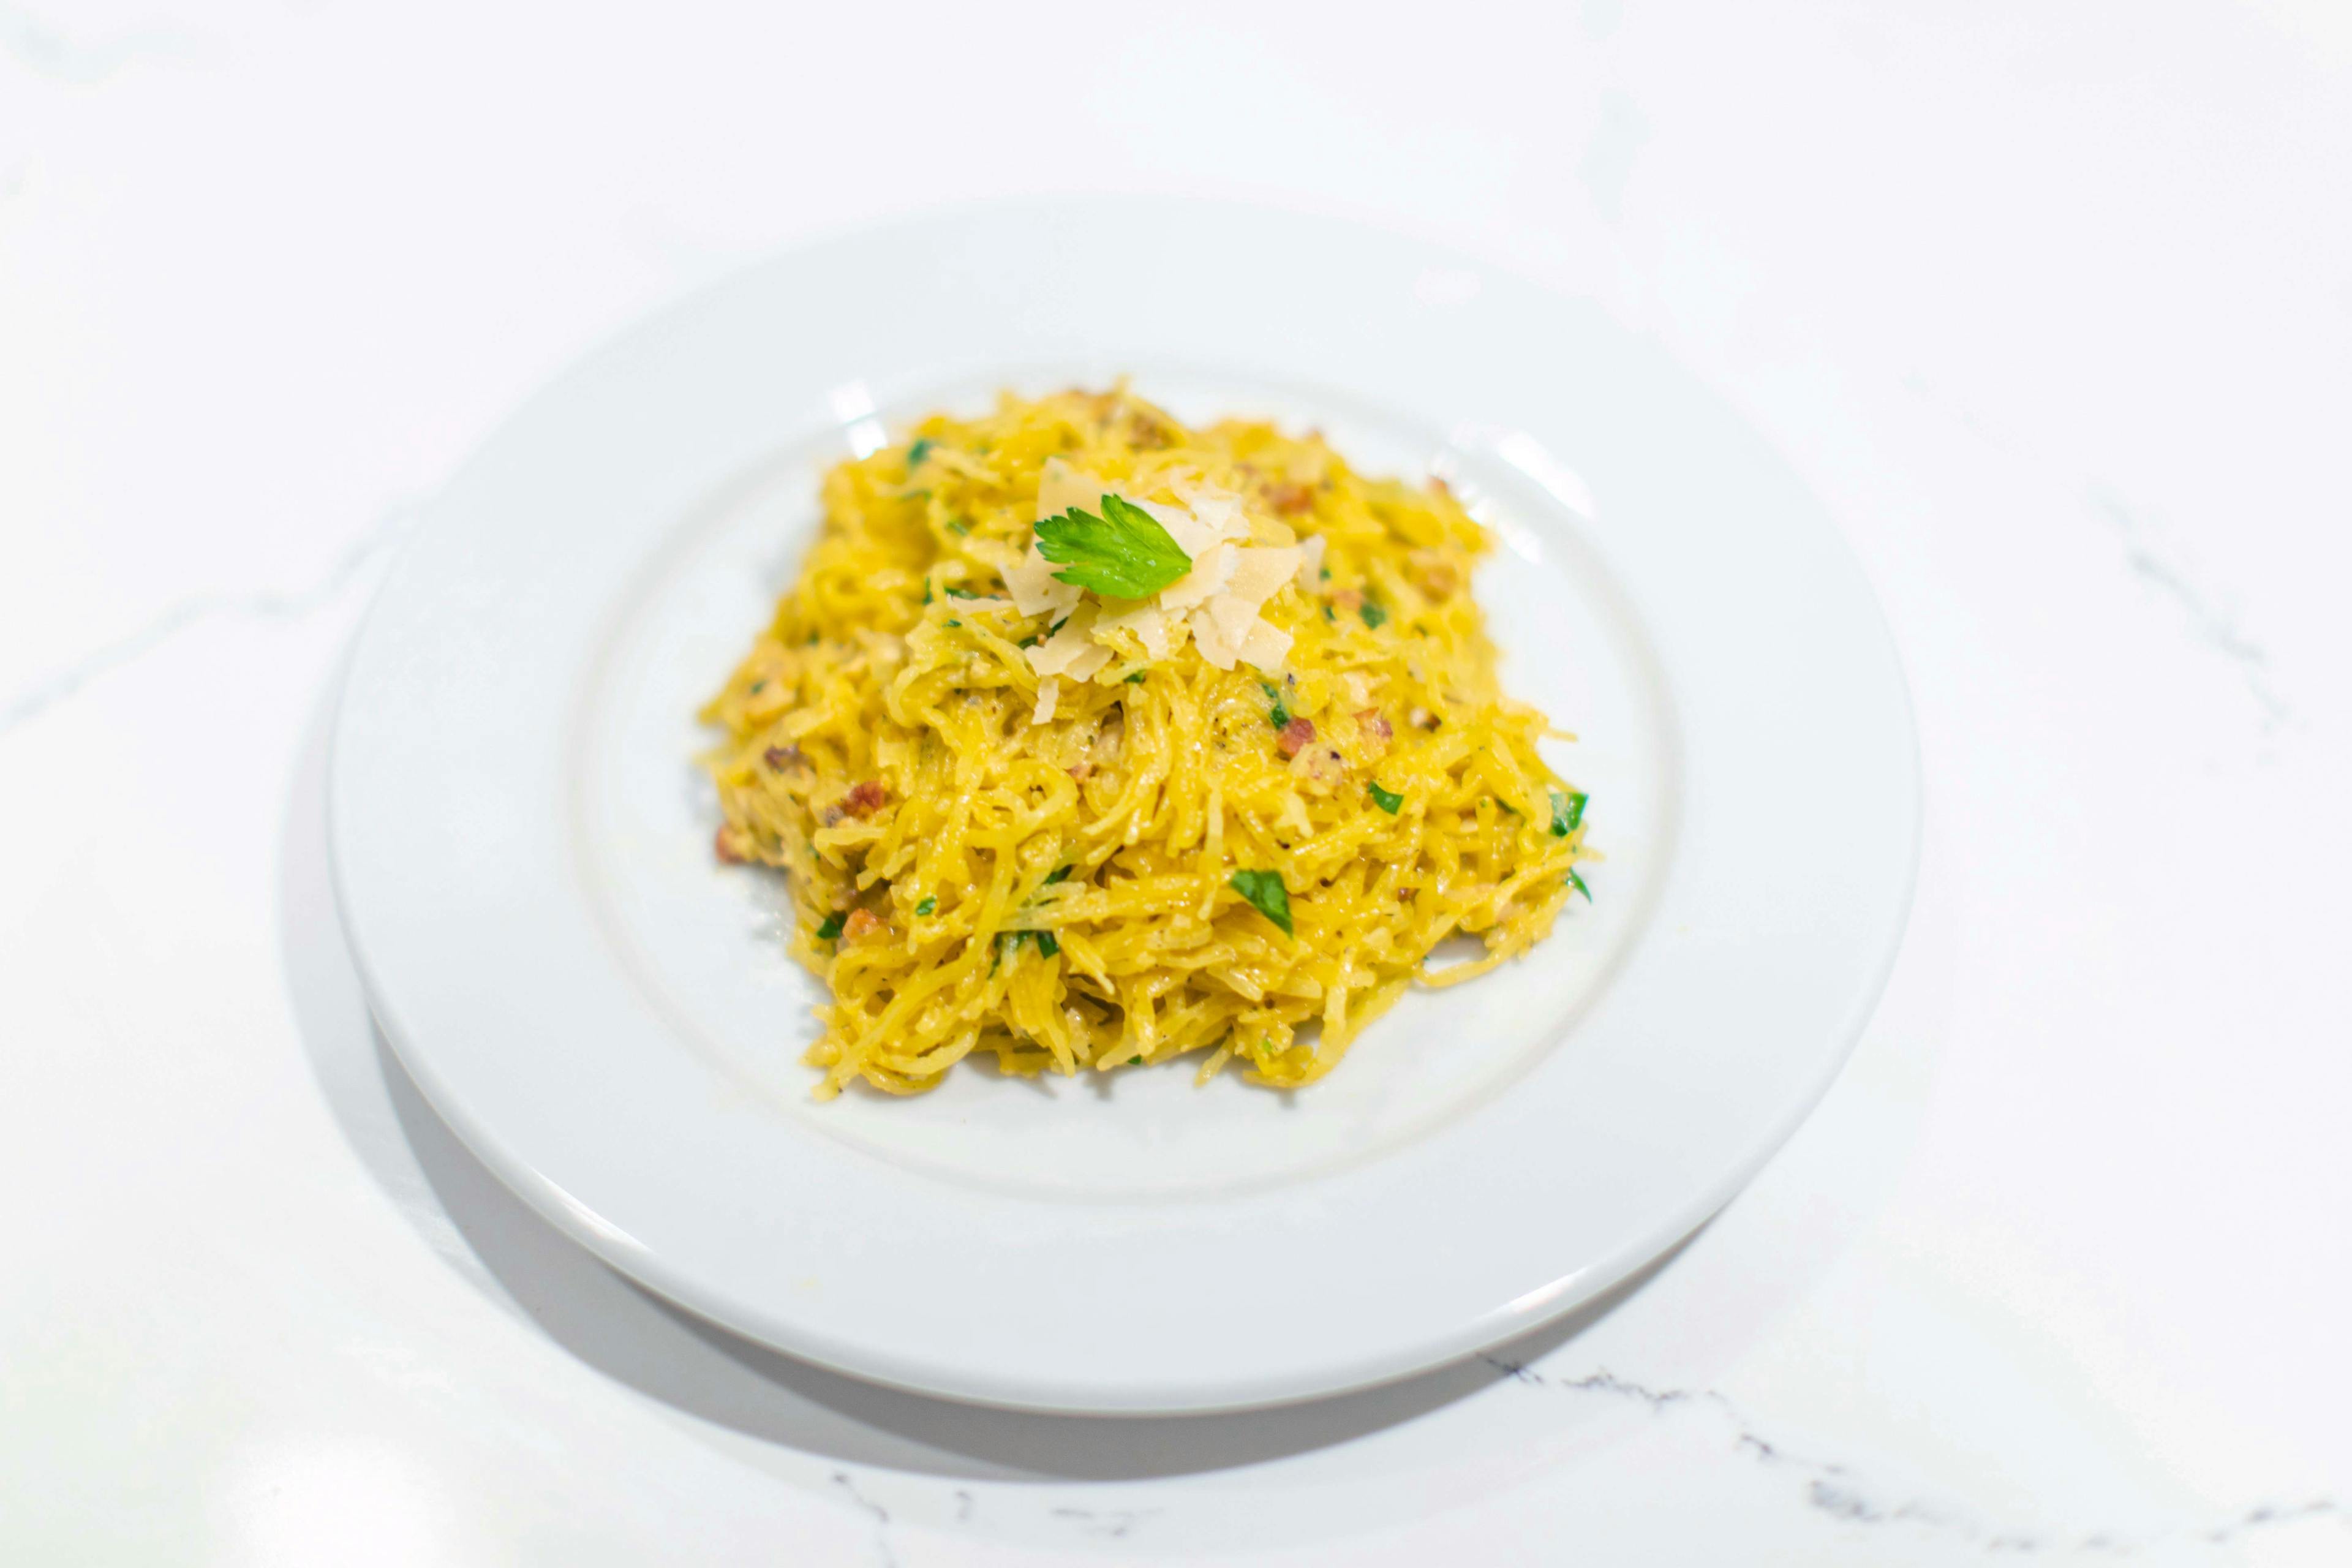 The Holly Furtick recipe: 'Spaghetti Squash Carbonara'